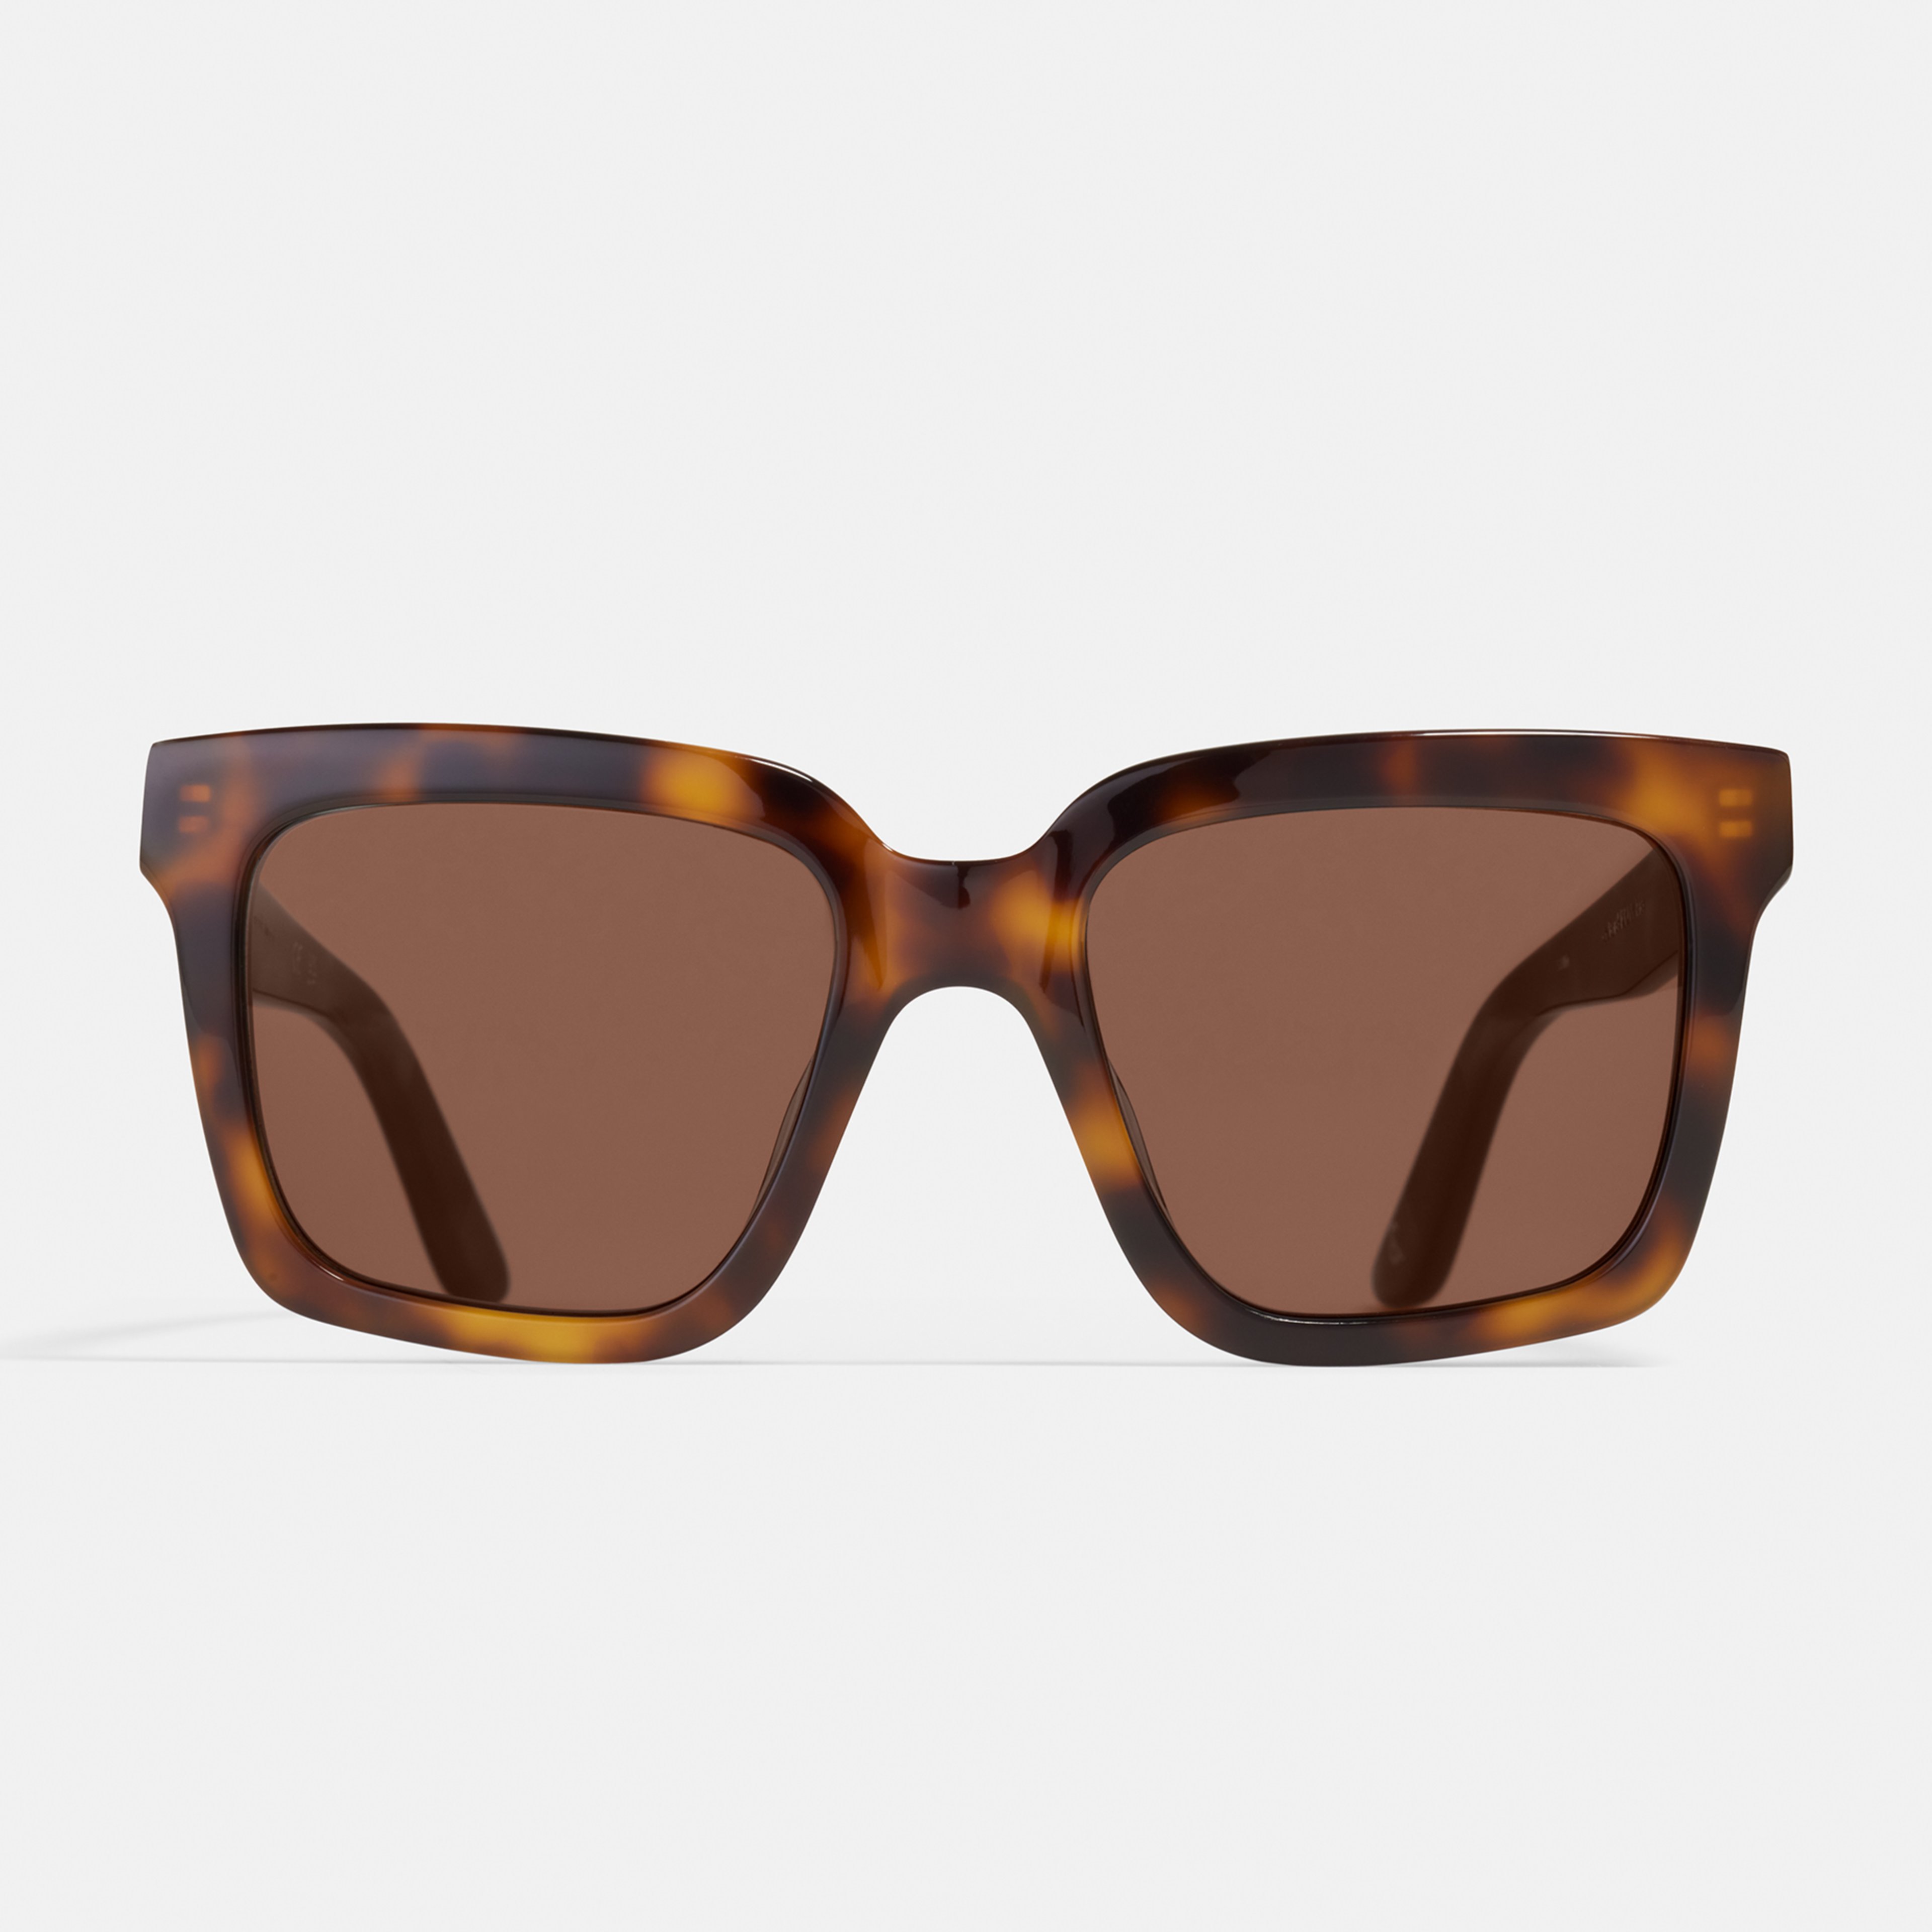 Ace & Tate Sunglasses |  Renew bio acetate in Brown